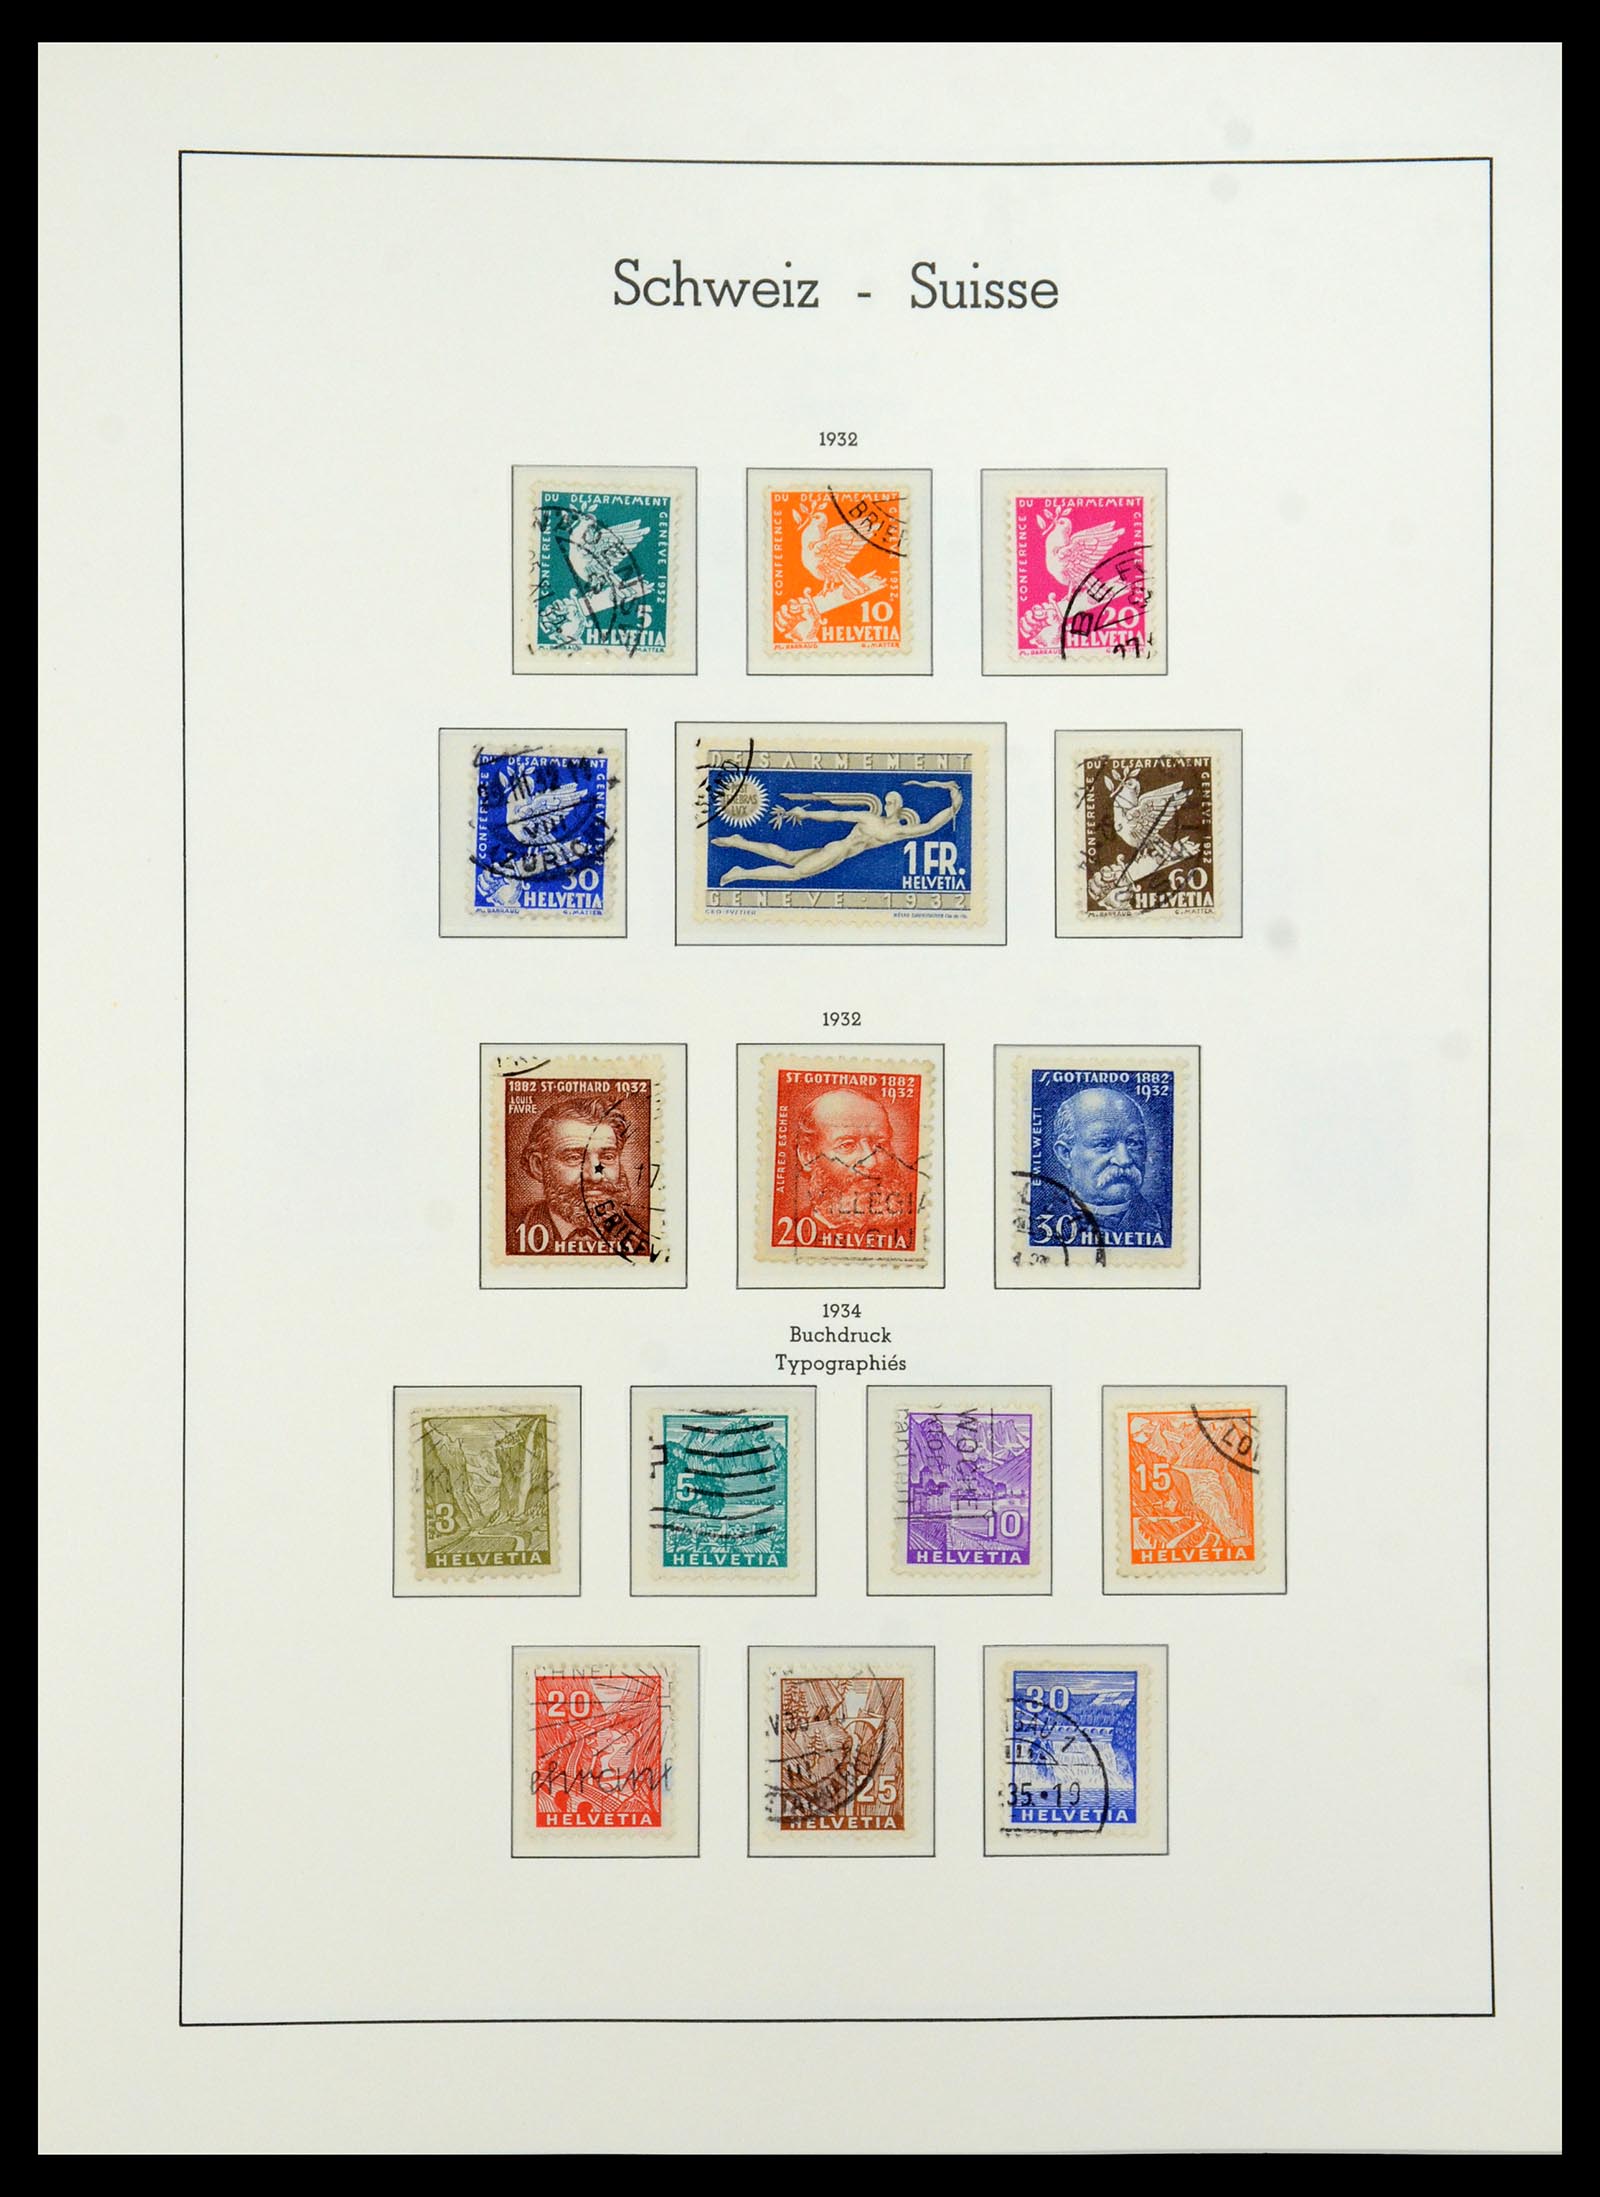 36284 019 - Stamp collection 36284 Switzerland 1854-2006.